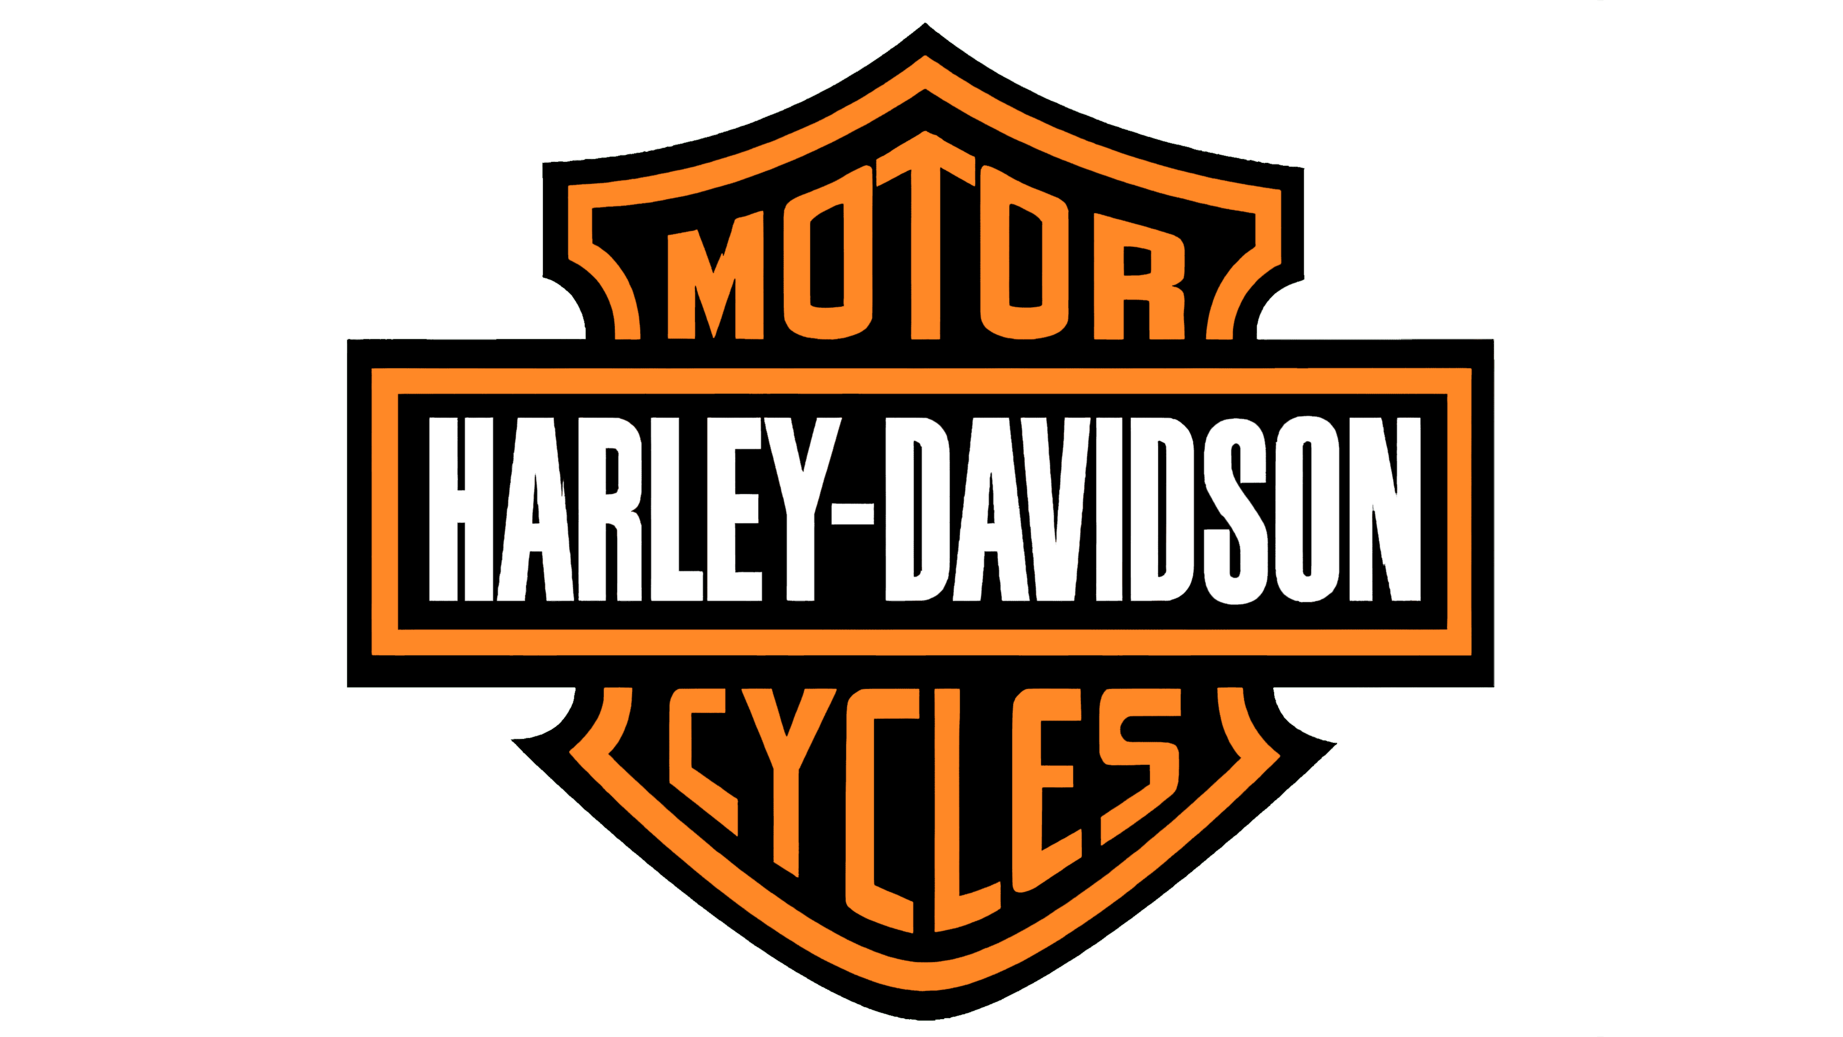 Harley davidson motorcycles sign